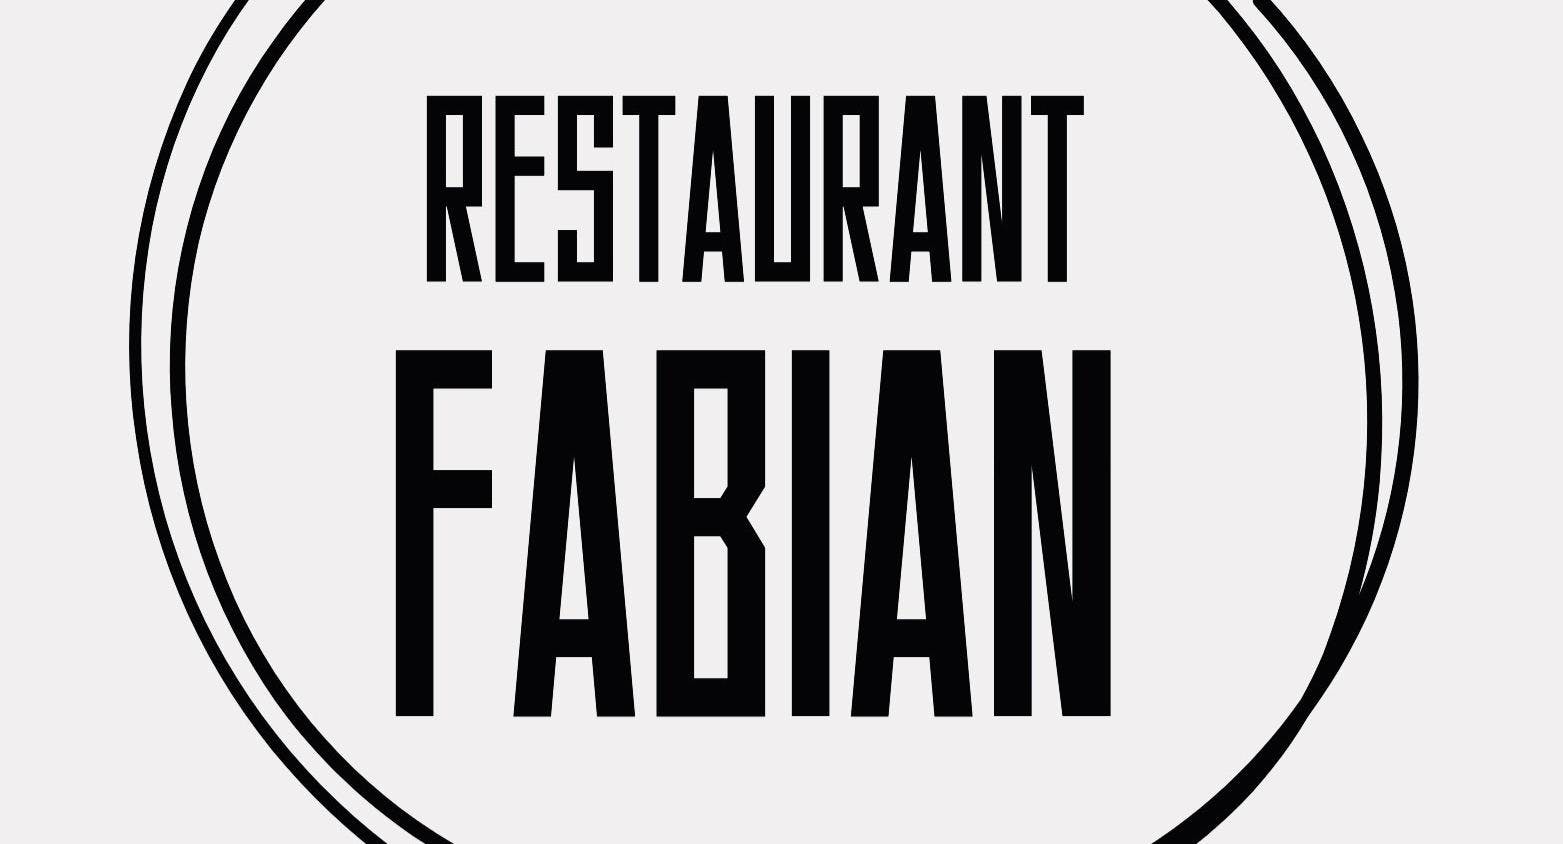 Photo of restaurant Restaurant Fabian in Ehrenfeld, Cologne